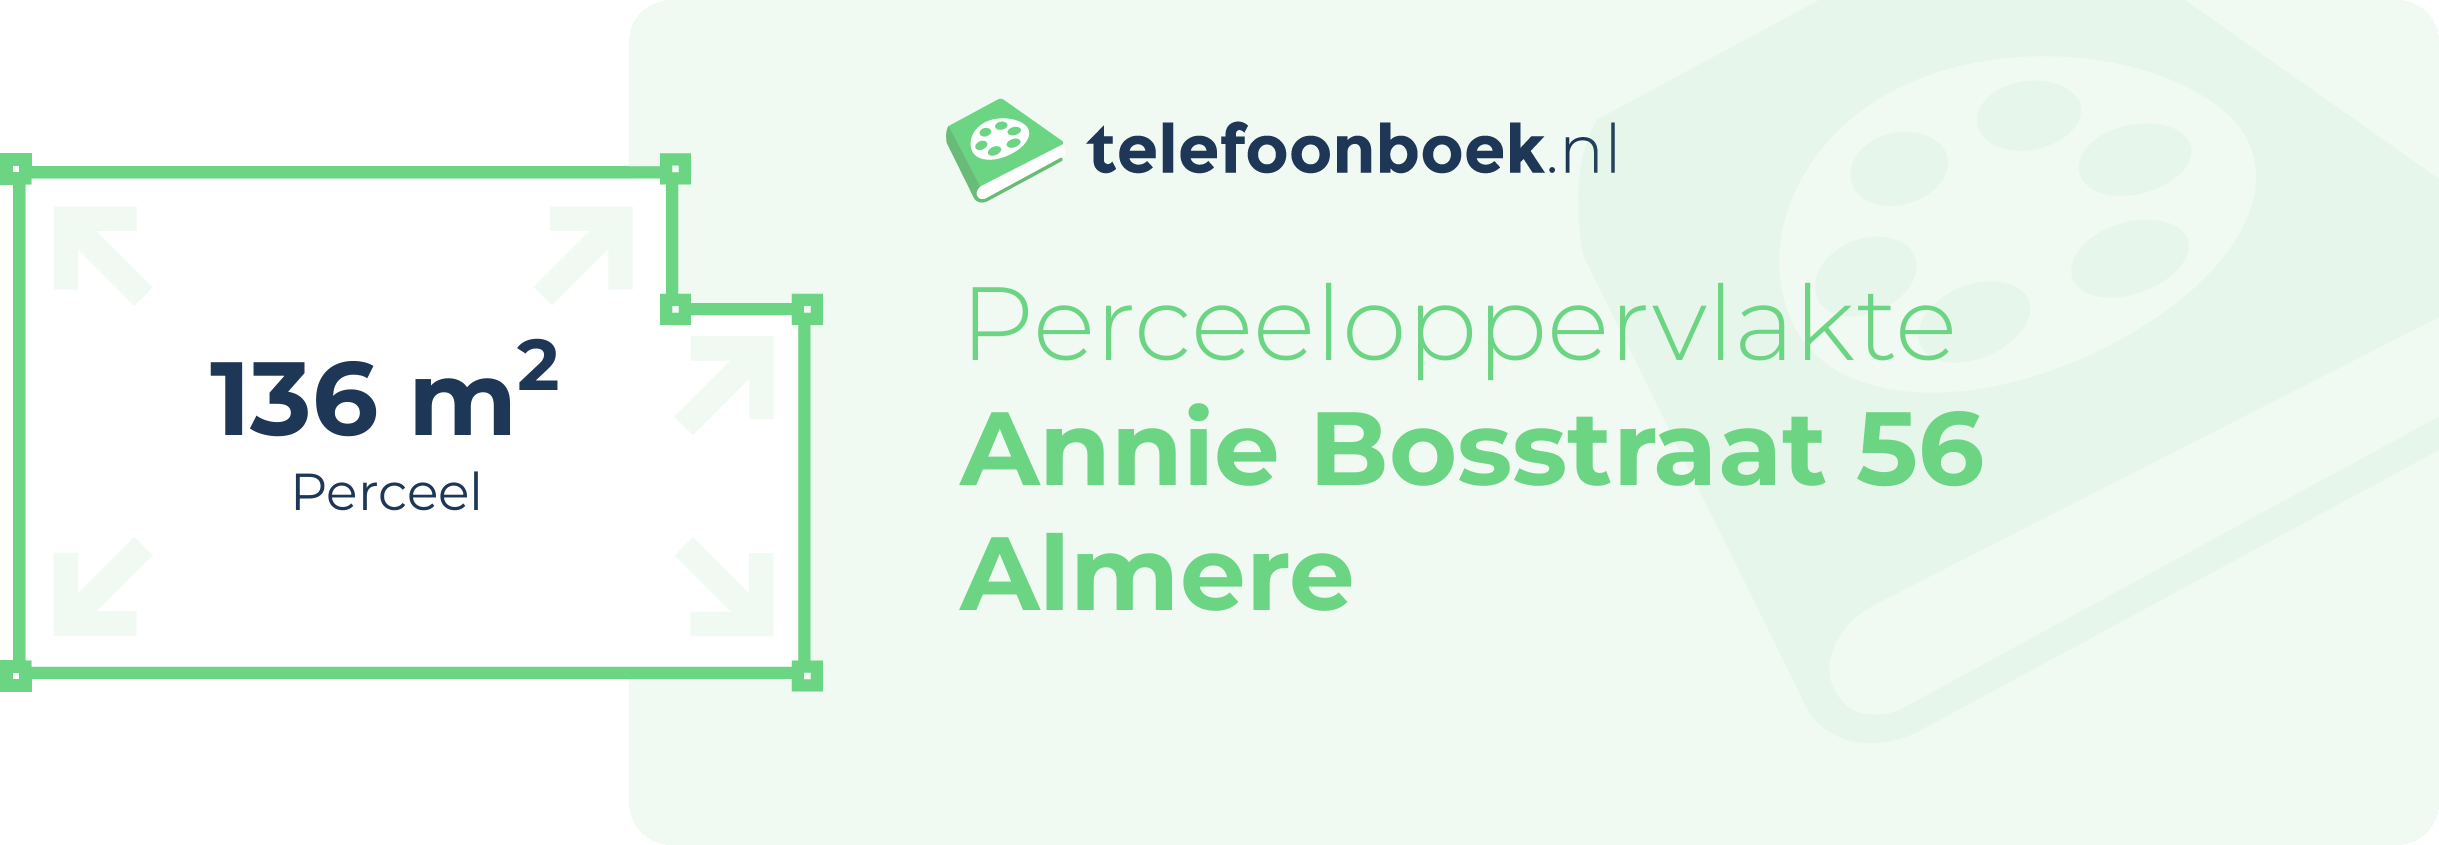 Perceeloppervlakte Annie Bosstraat 56 Almere